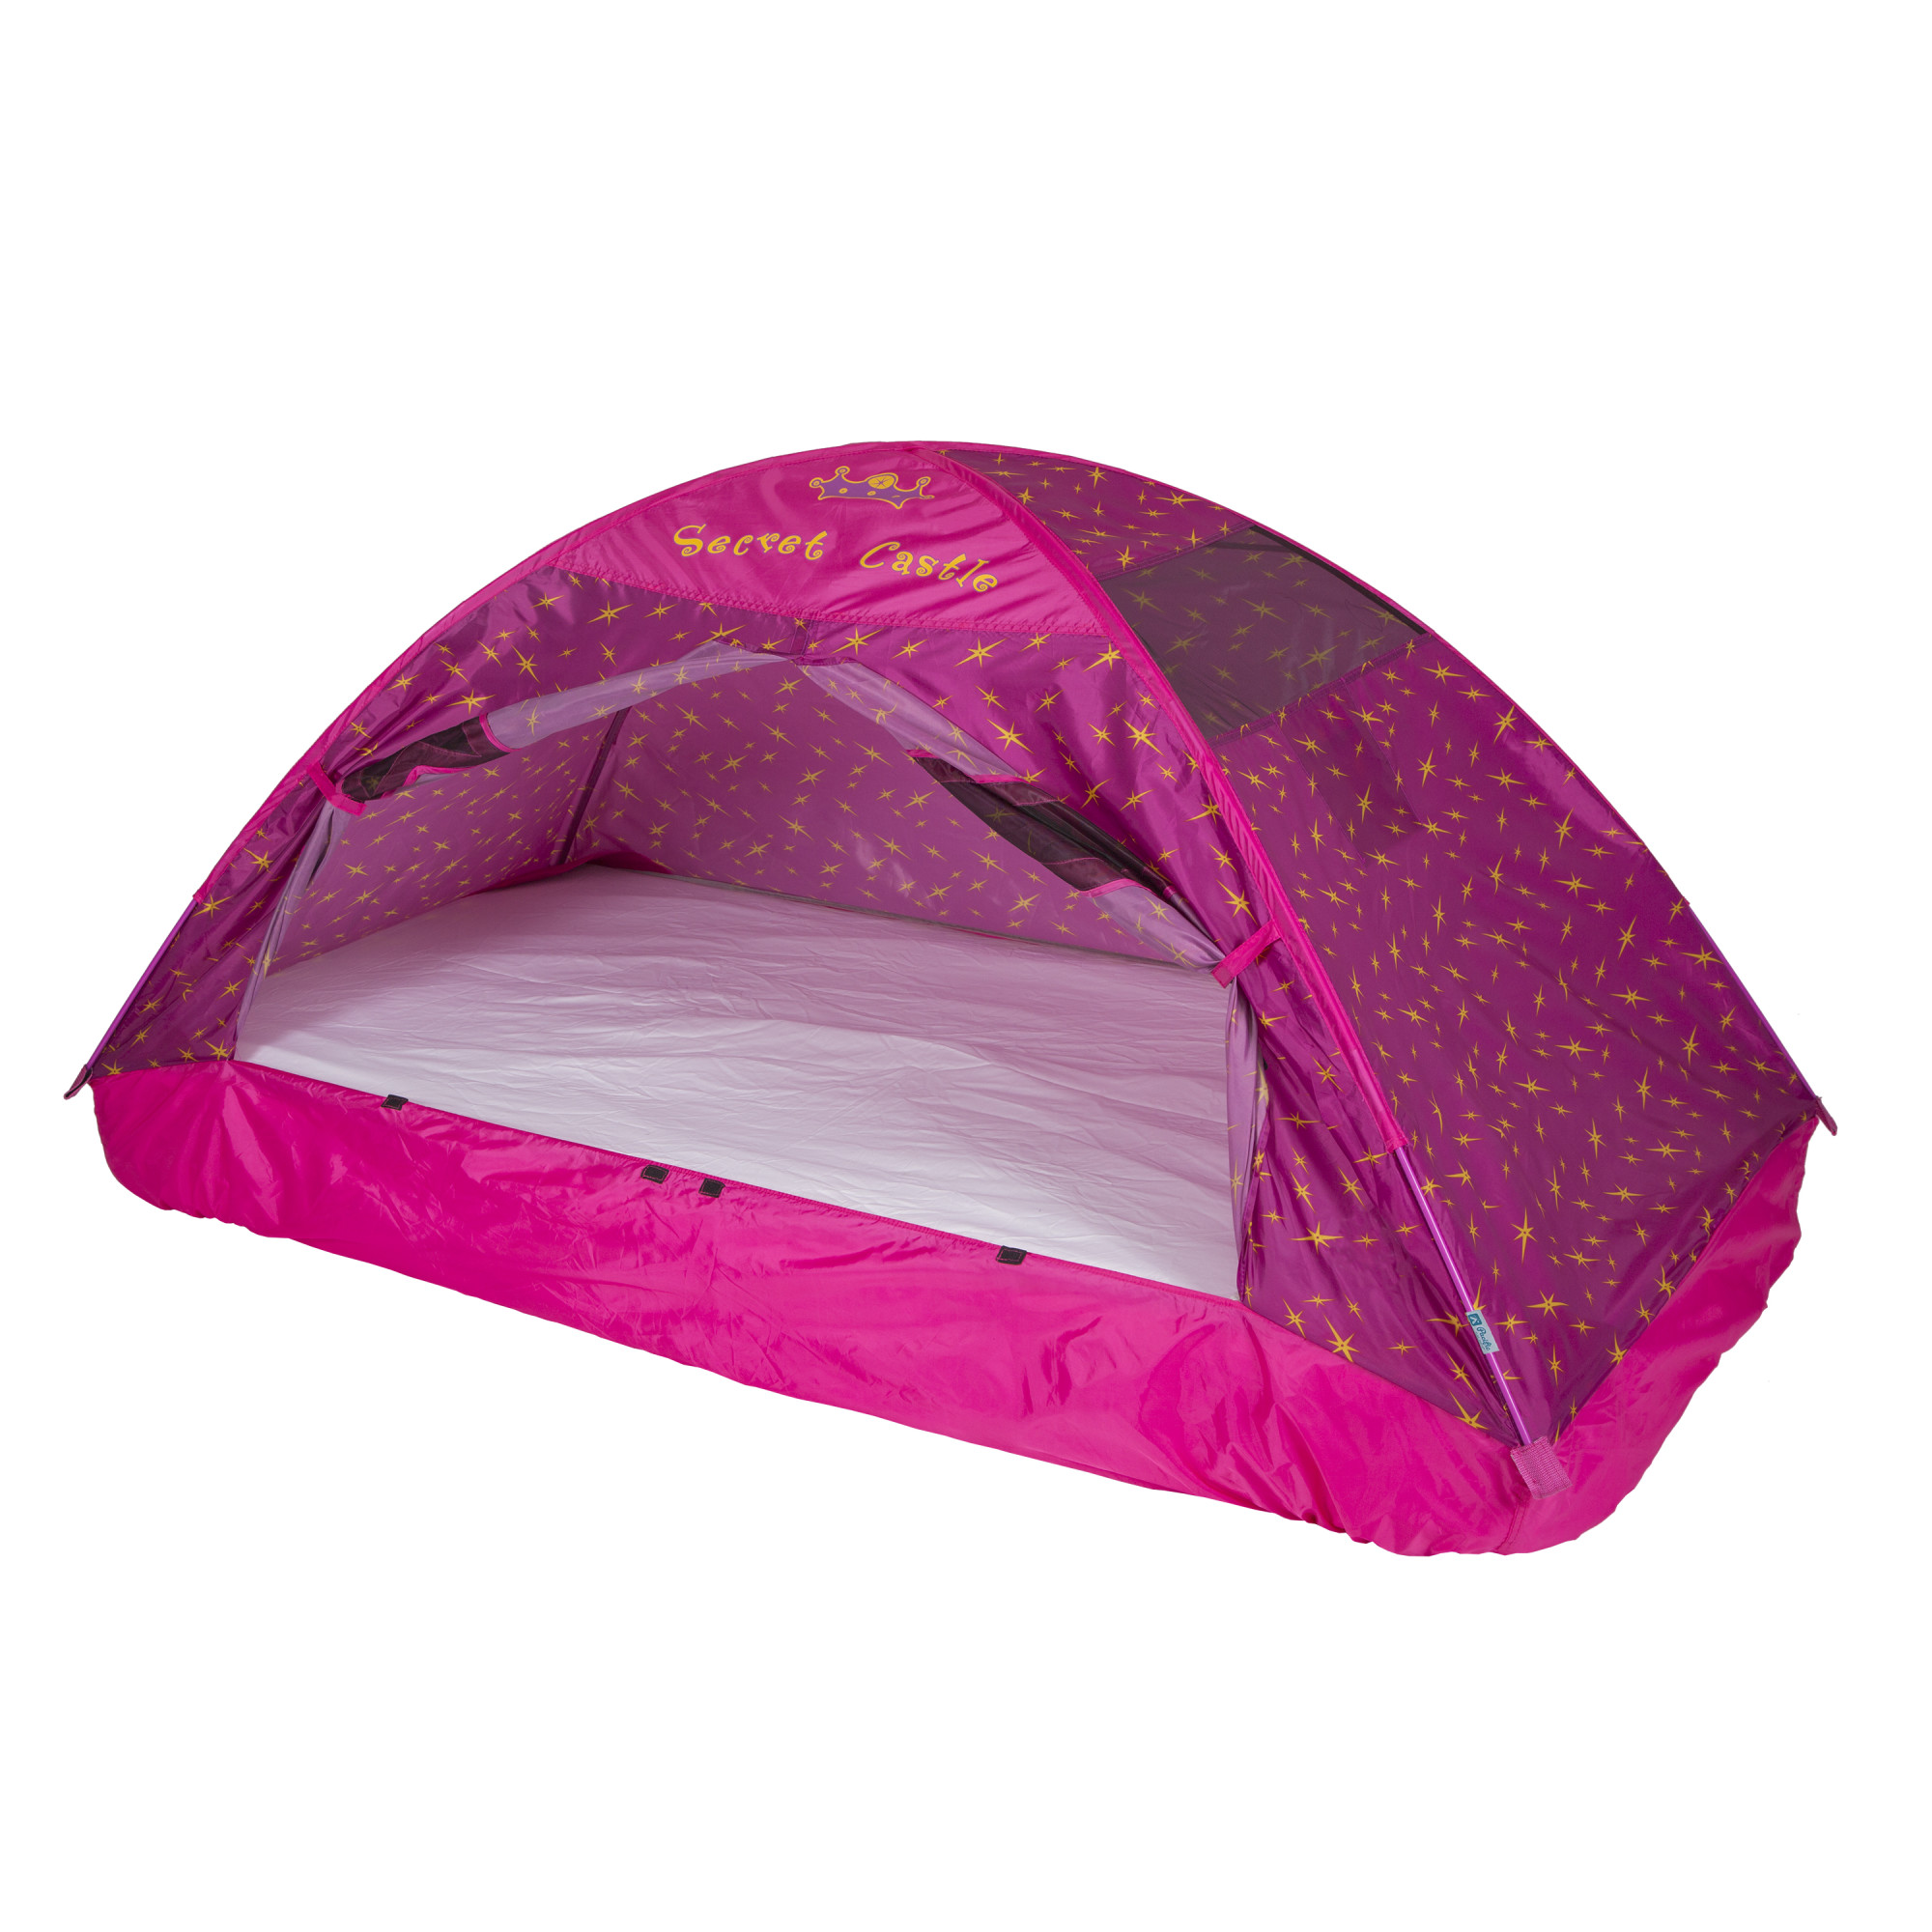 Pacific Play Tents Secret Castle Double Bed Tent - image 4 of 13